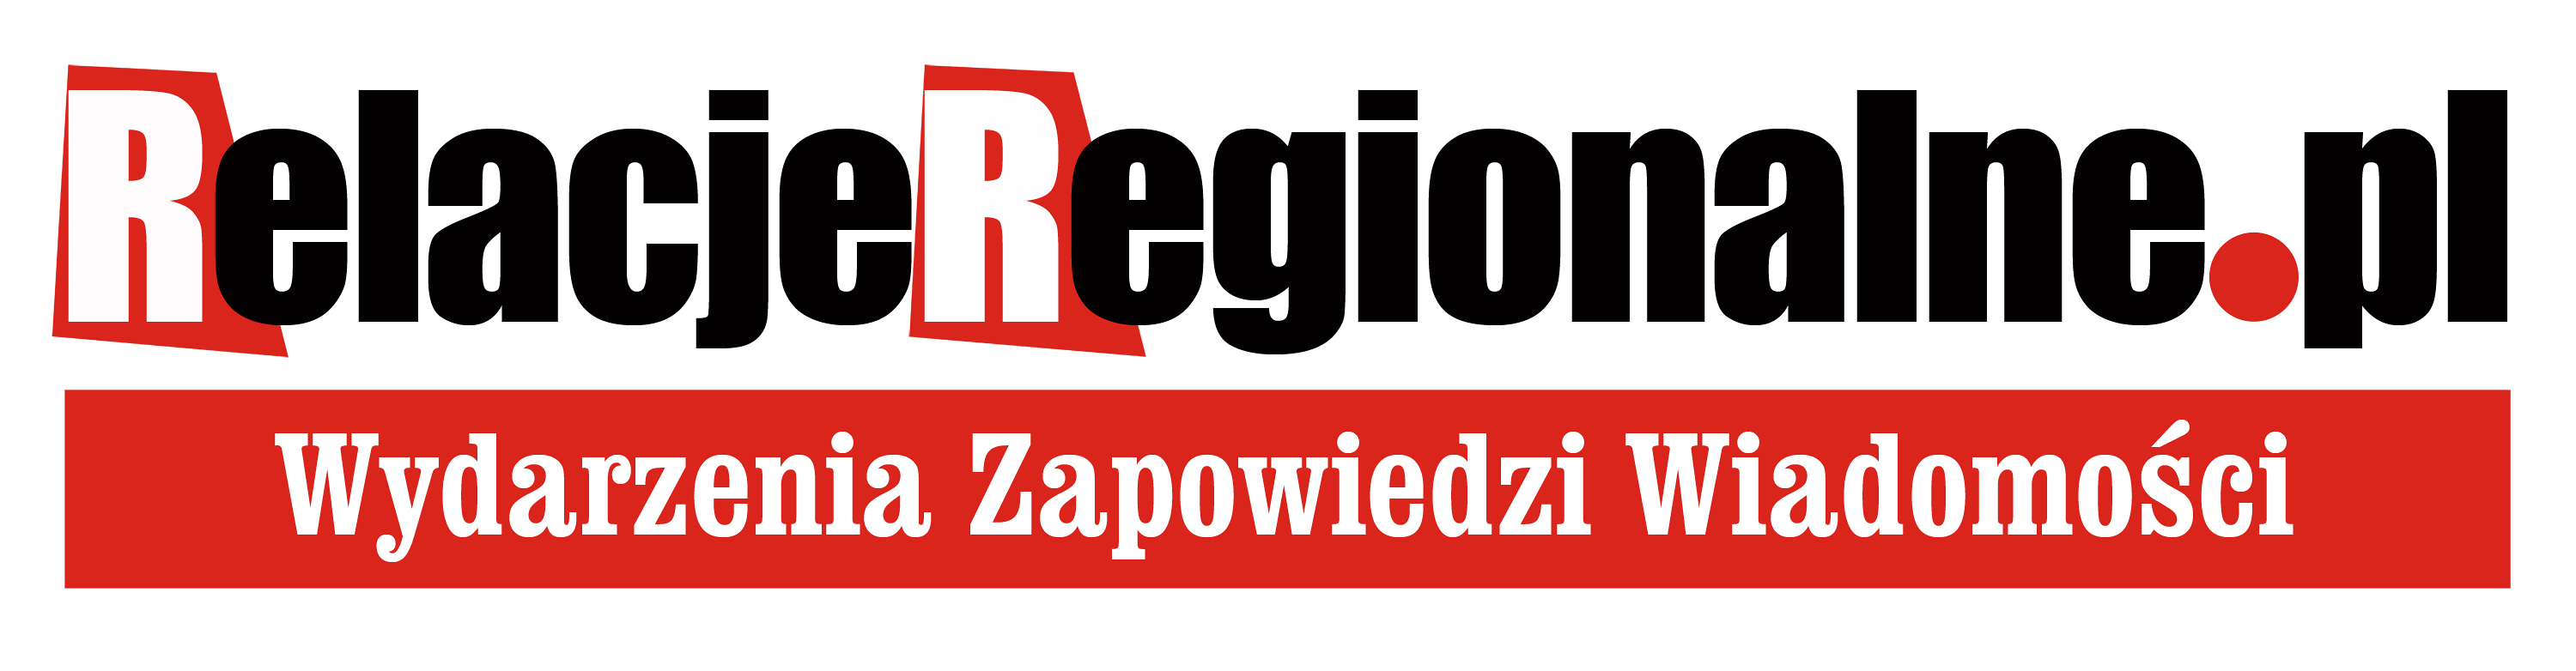 czadrow24.pl